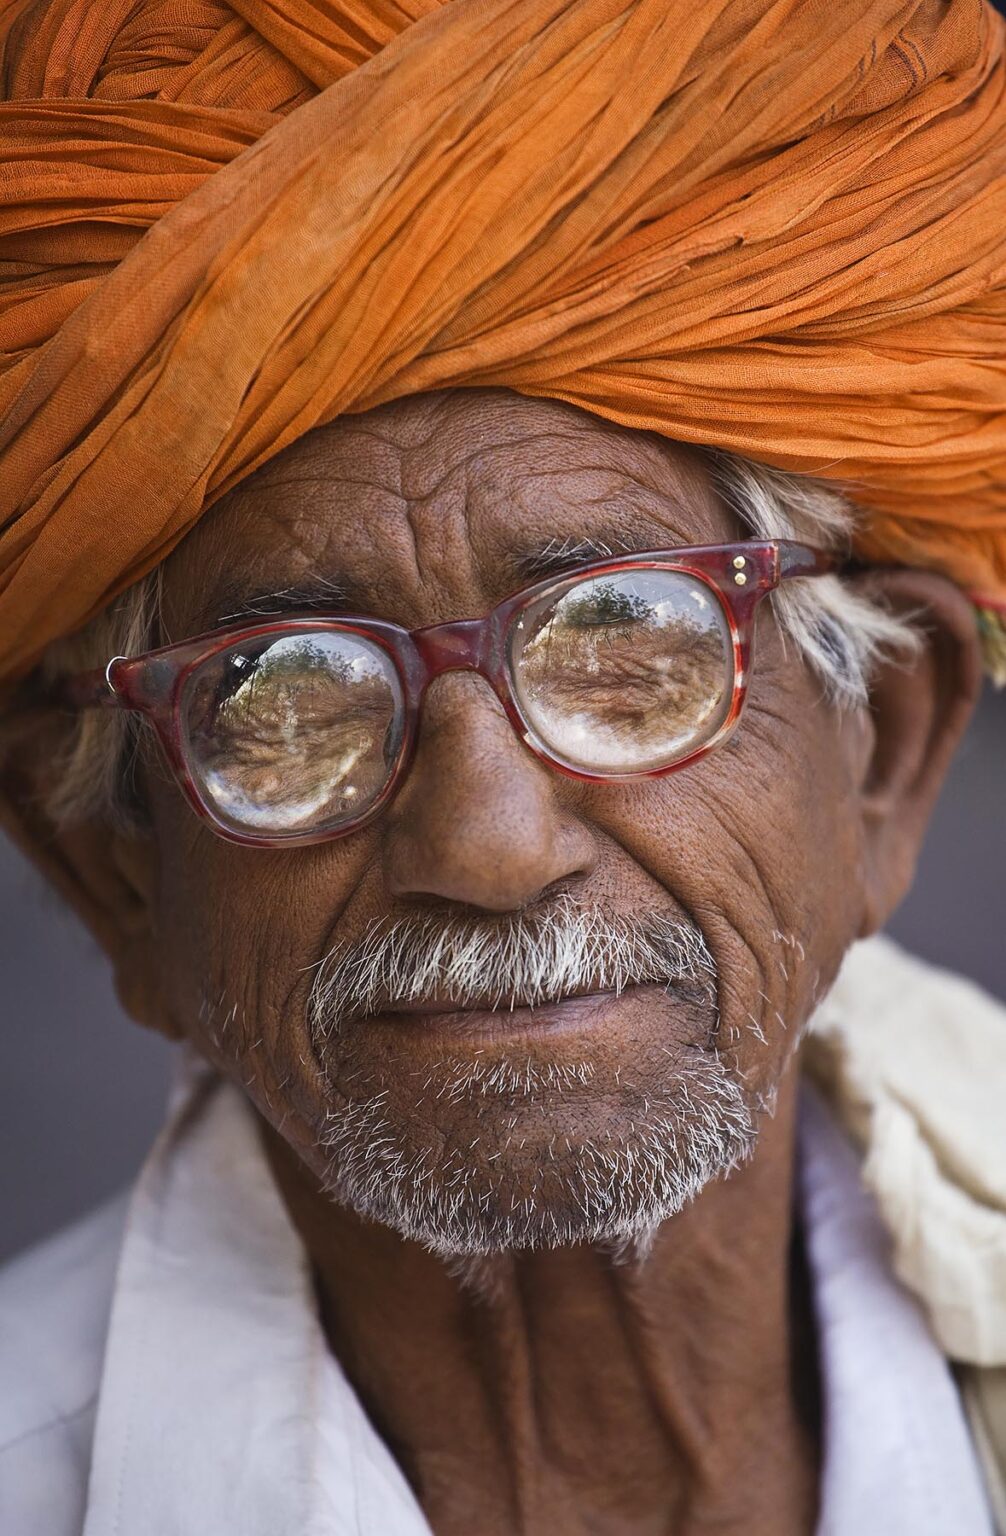 A RAJASTHANI MAN wearing thick GLASSES - JOHDPUR, RAJASTHAN, INDIA